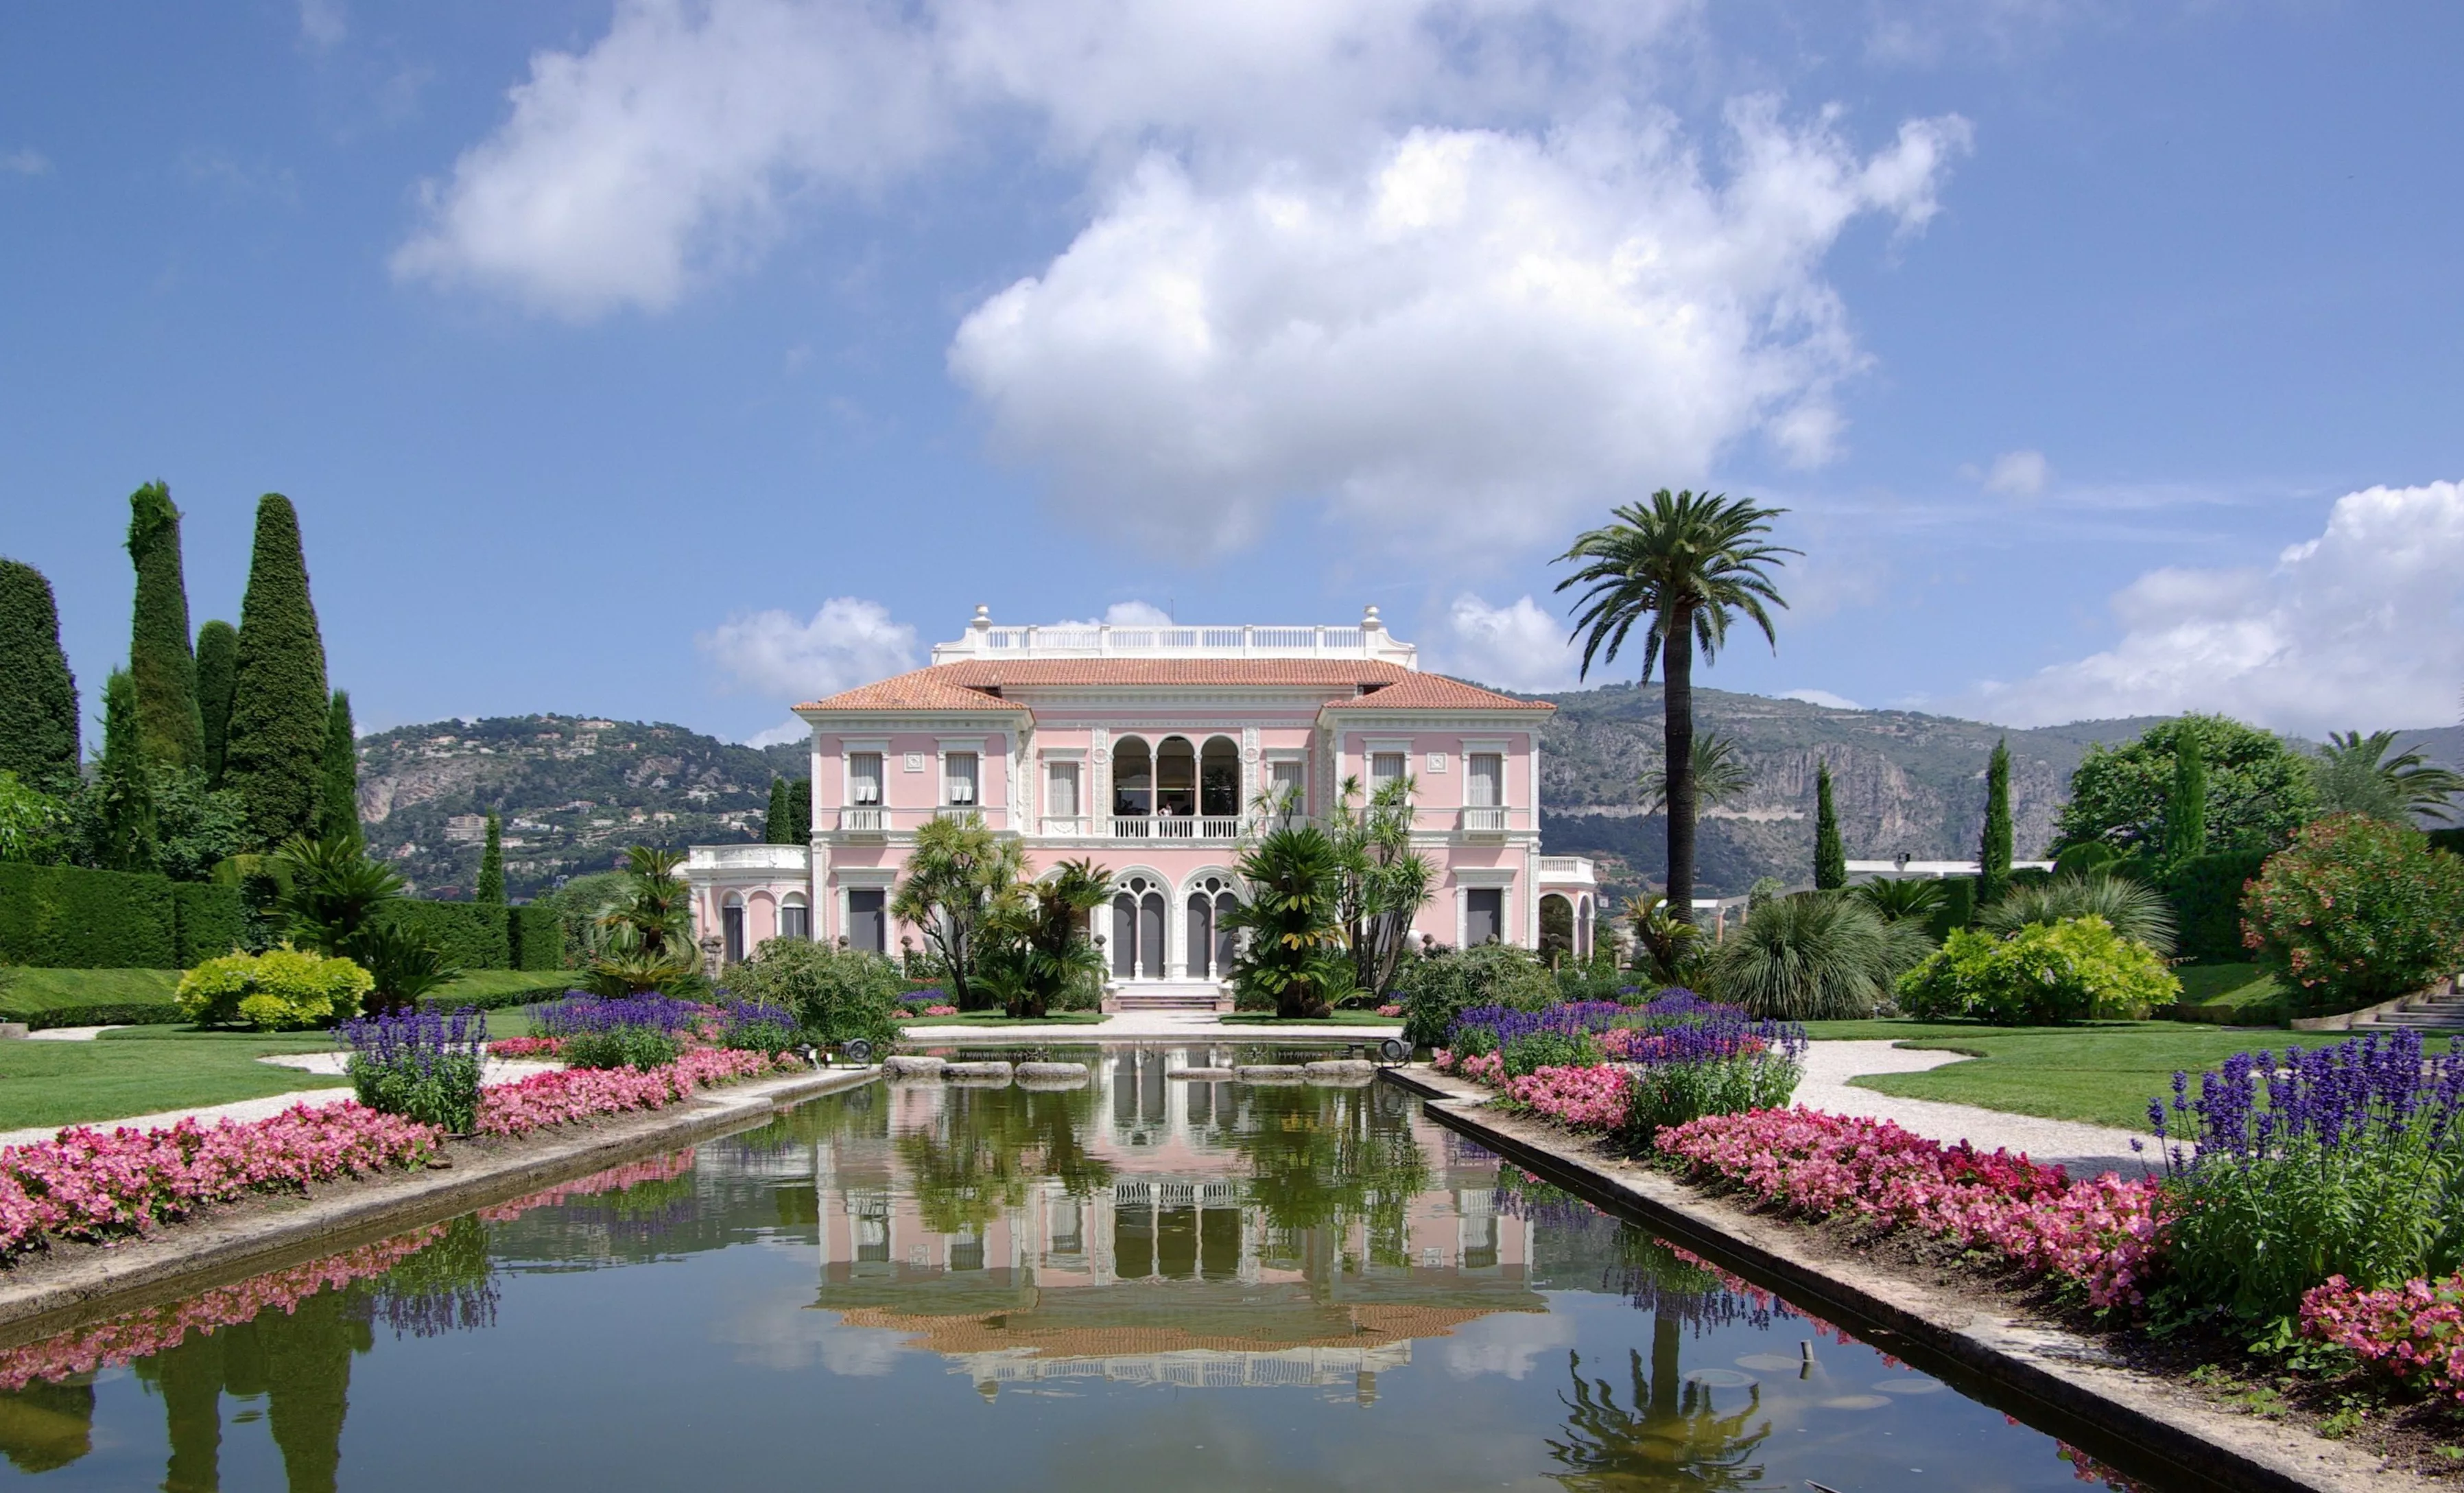 Villa Rothschild & Gardens in France, Europe | Architecture,Gardens - Rated 3.5